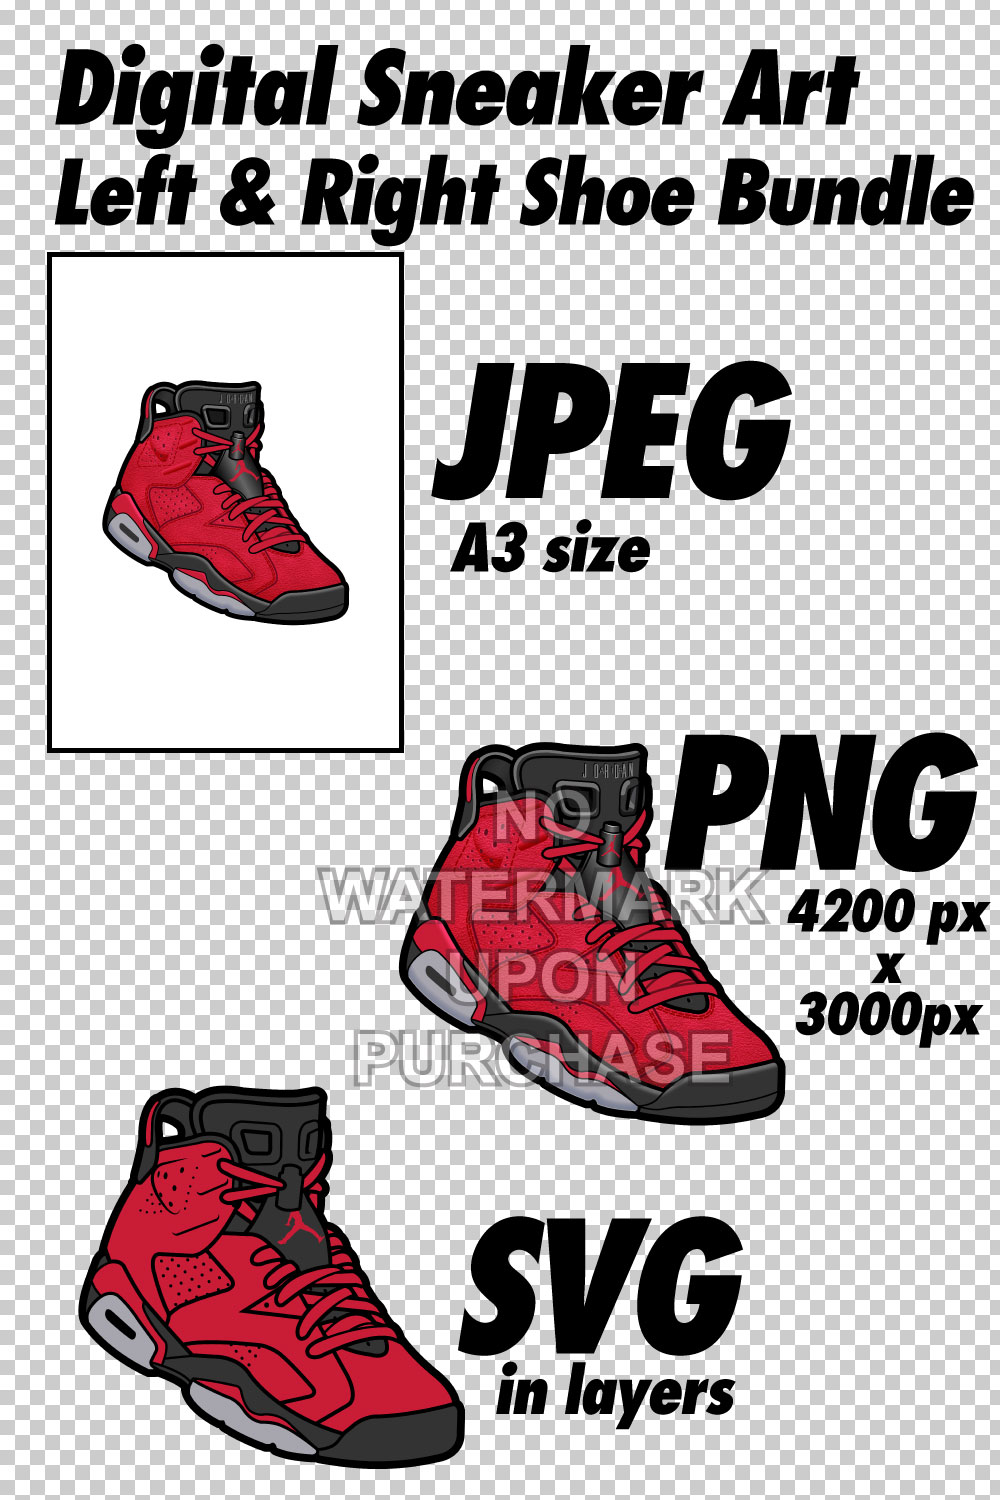 Air Jordan 6 Toro JPEG PNG SVG right & left shoe bundle pinterest preview image.